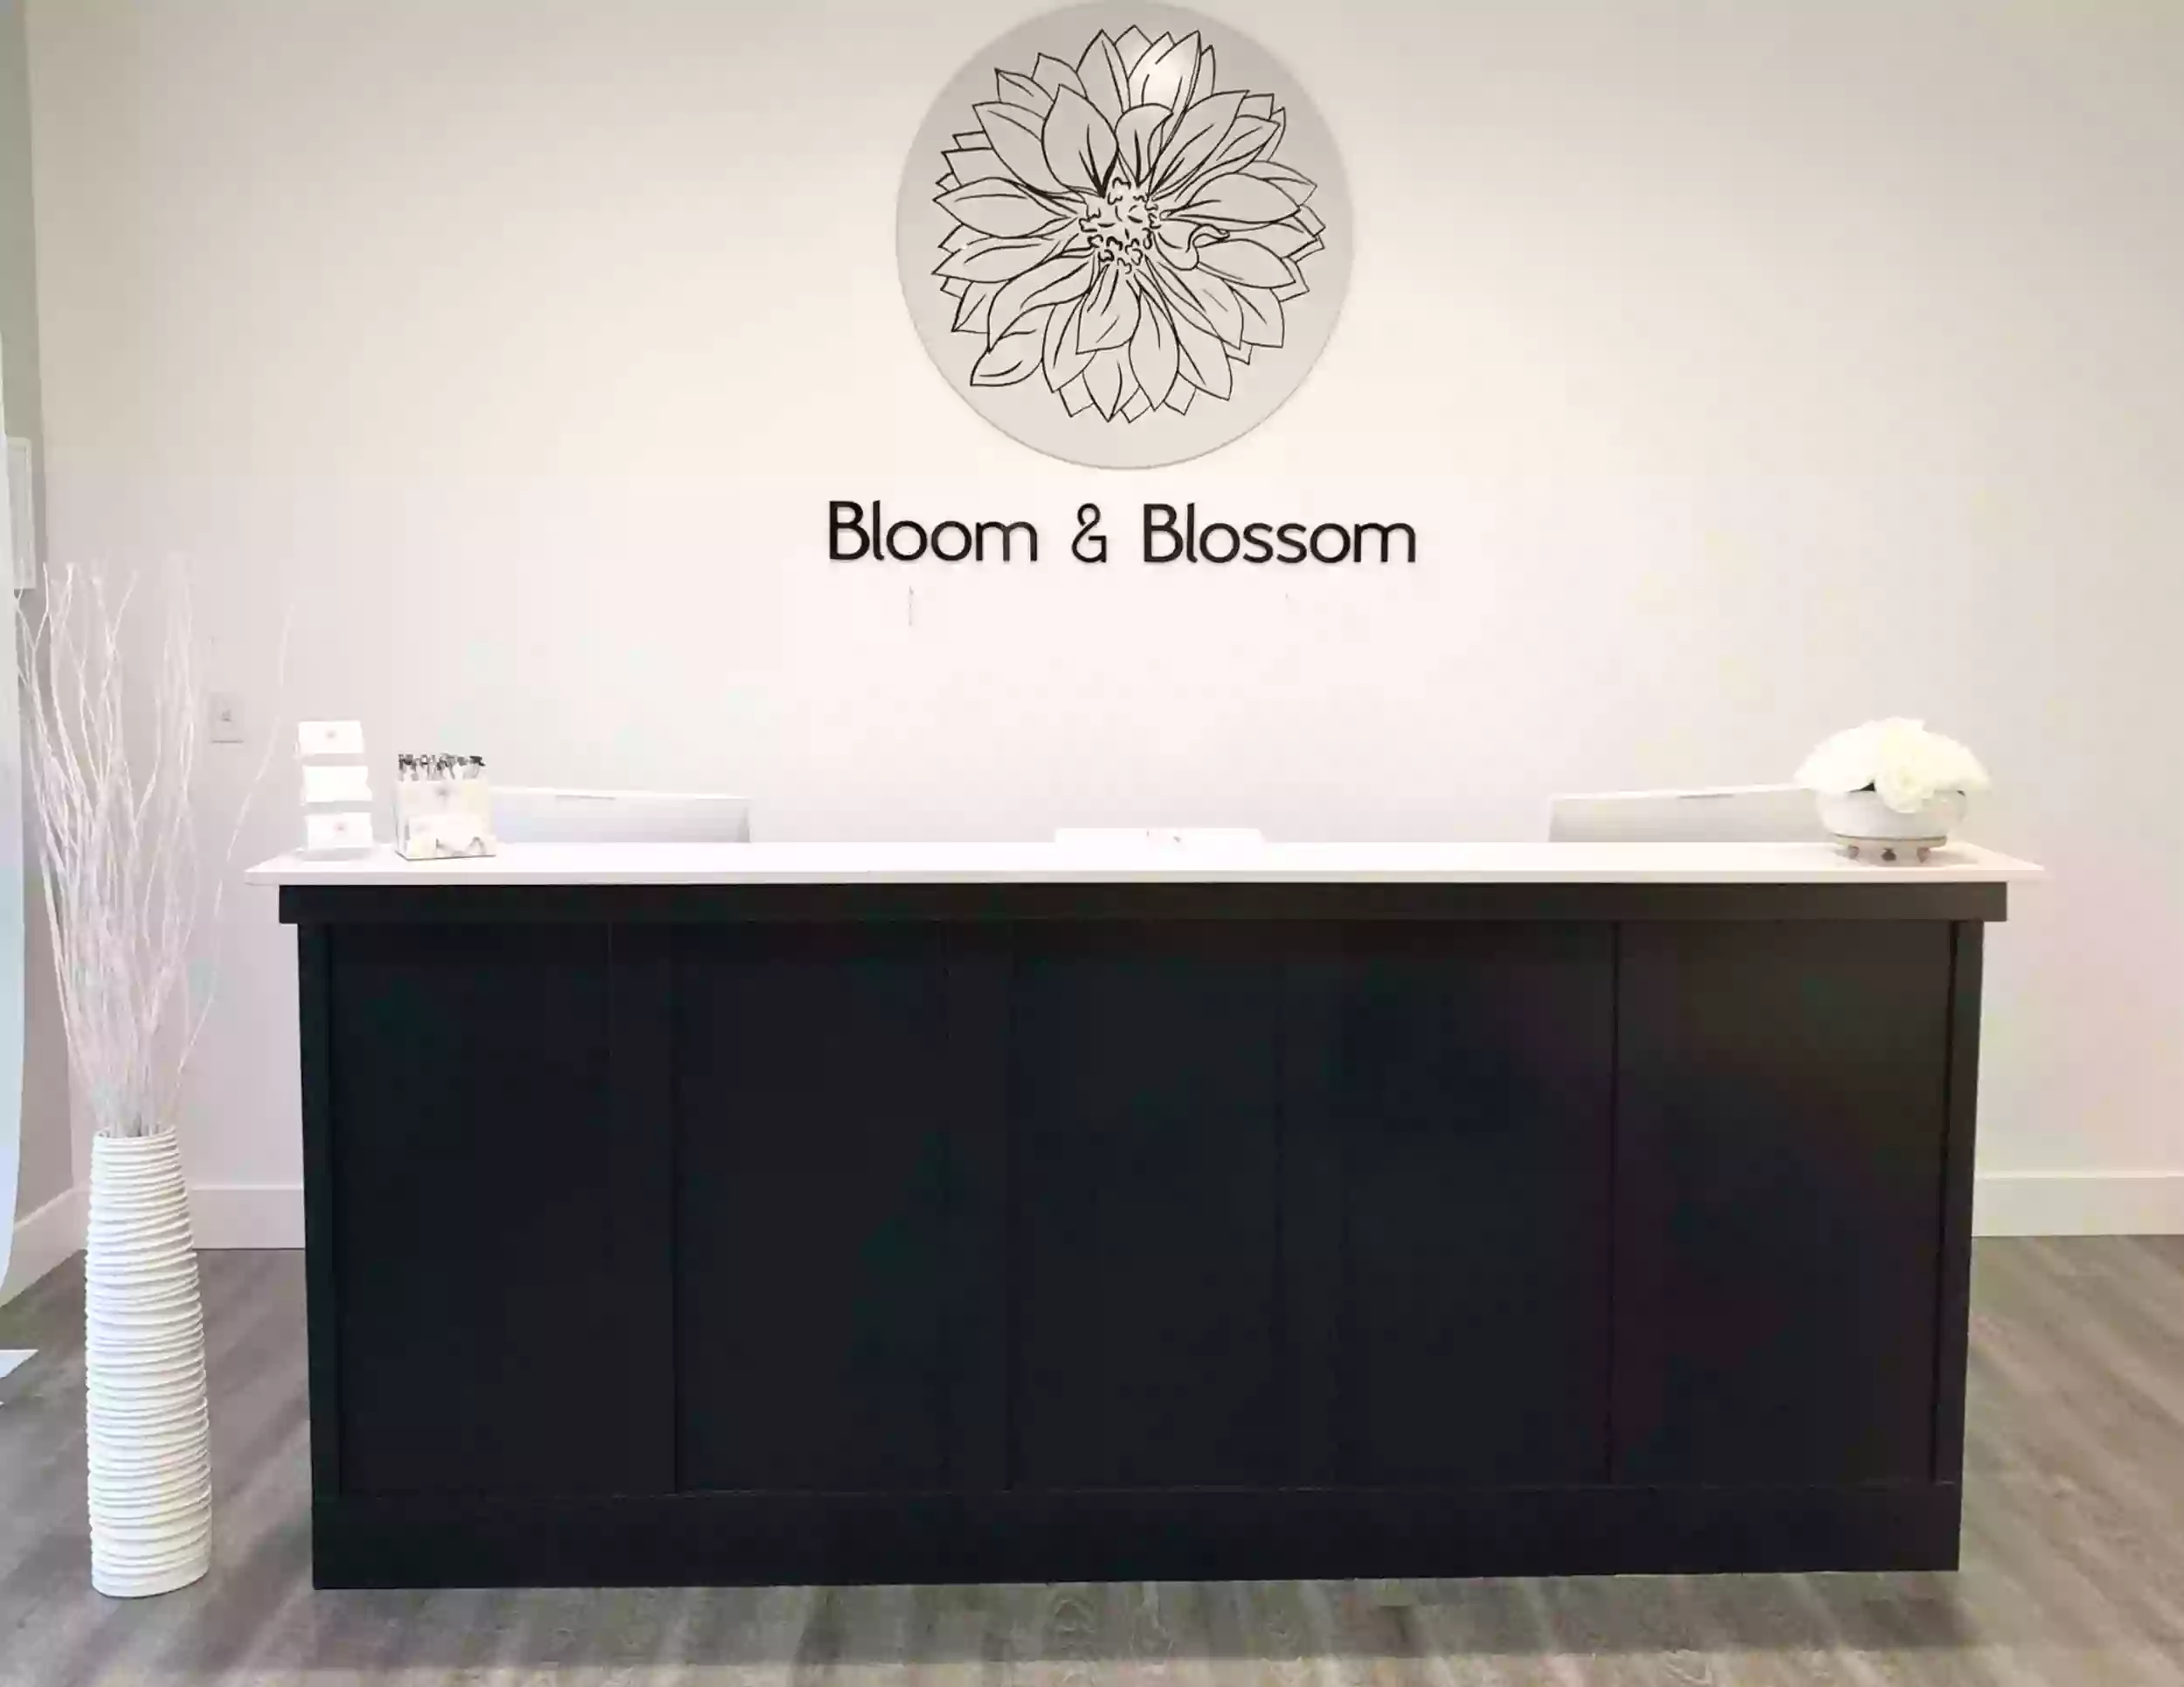 Bloom and Blossom Wellness Center